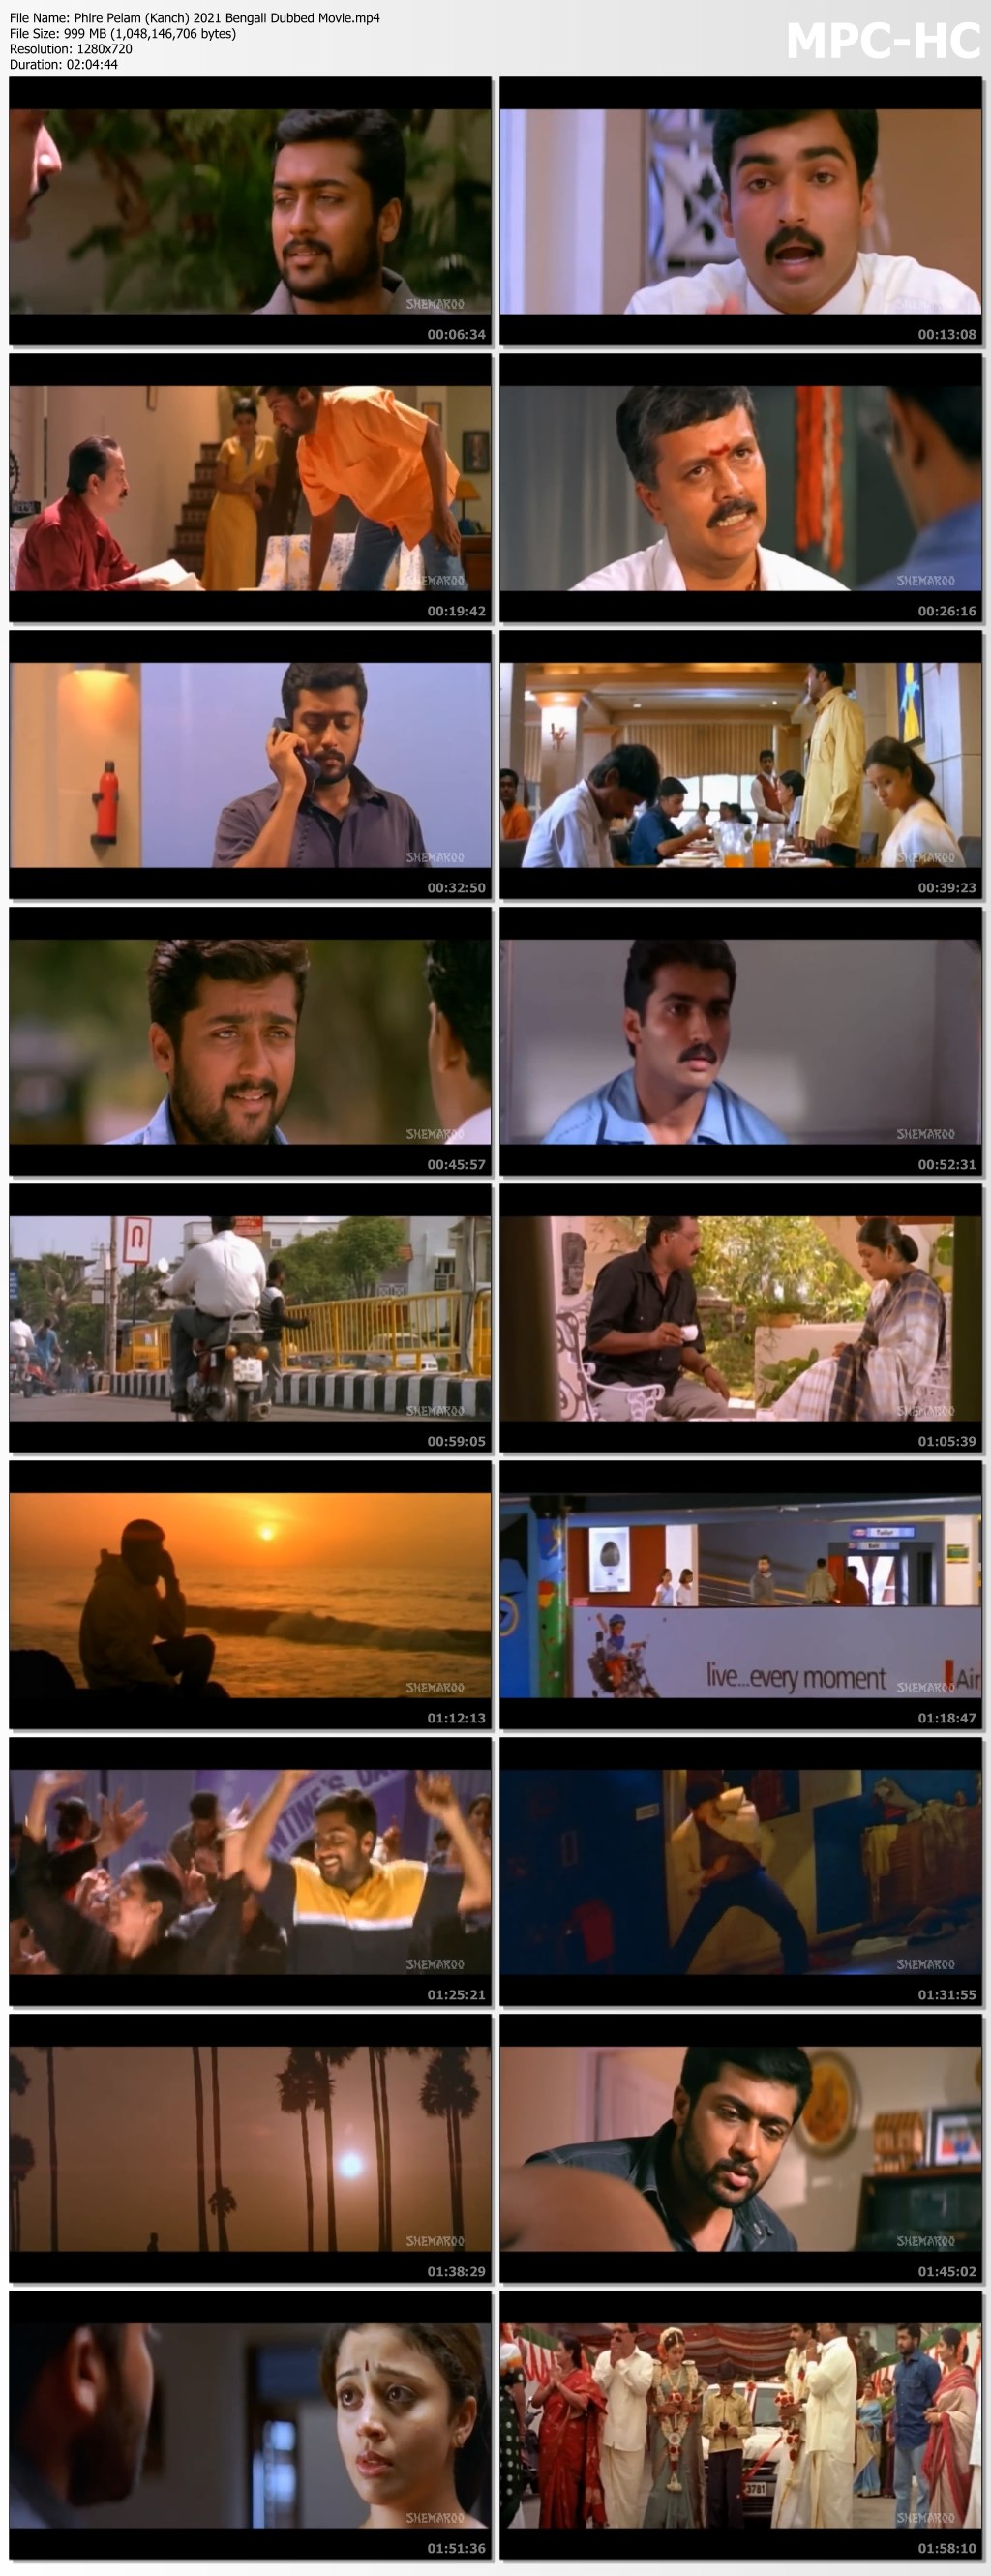 Phire-Pelam-Kanch-2021-Bengali-Dubbed-Movie.mp4_thumbs.jpg